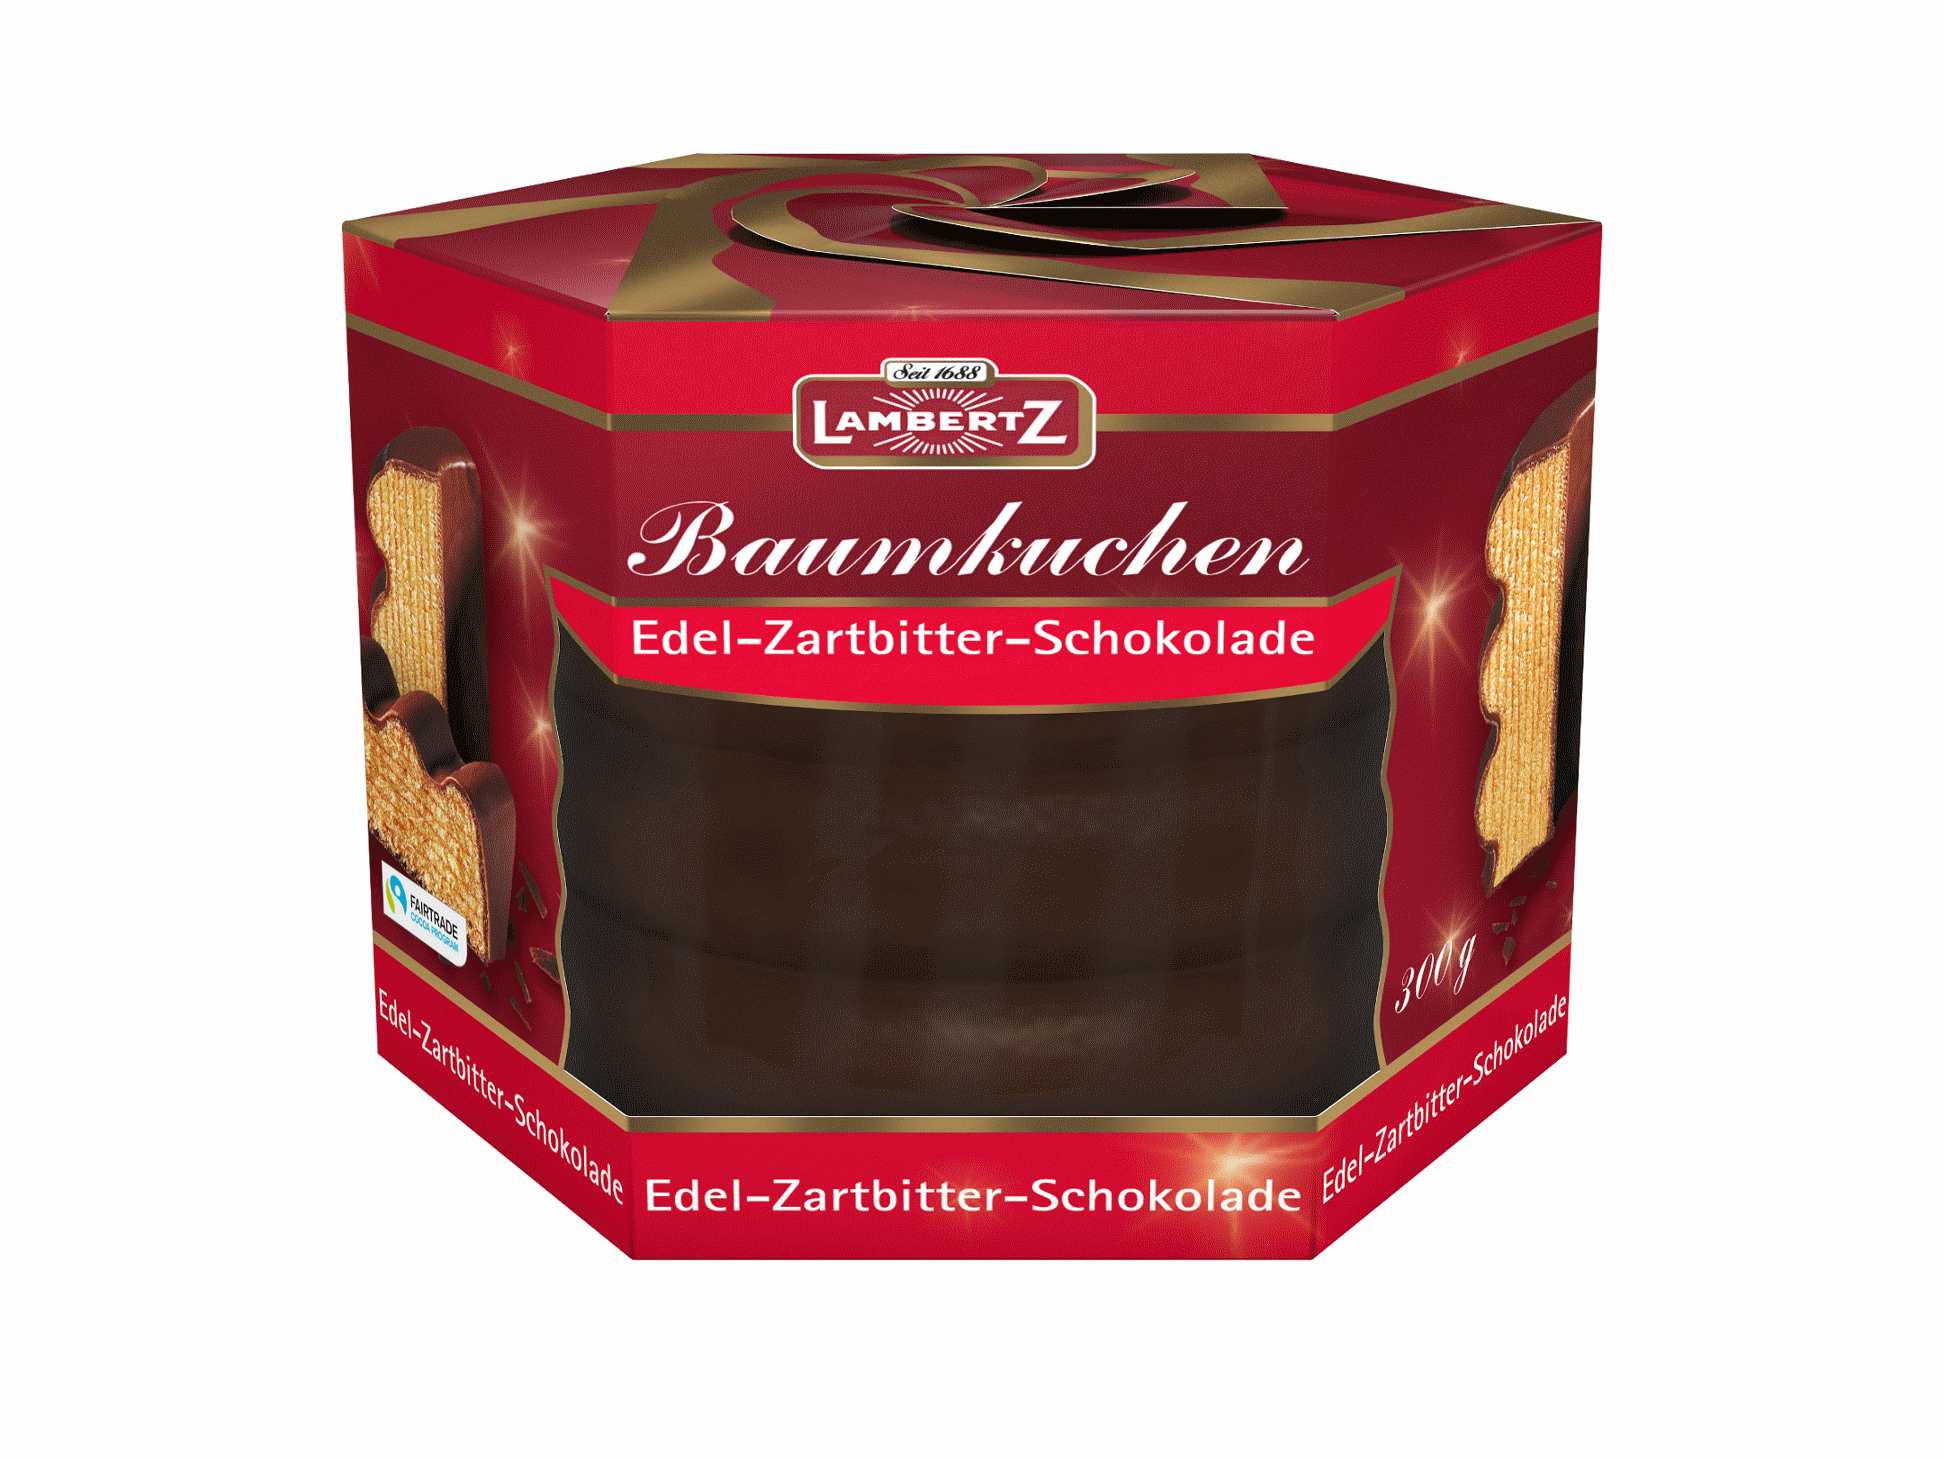 Baumkuchen Edel-Zartbitter-Schokolade